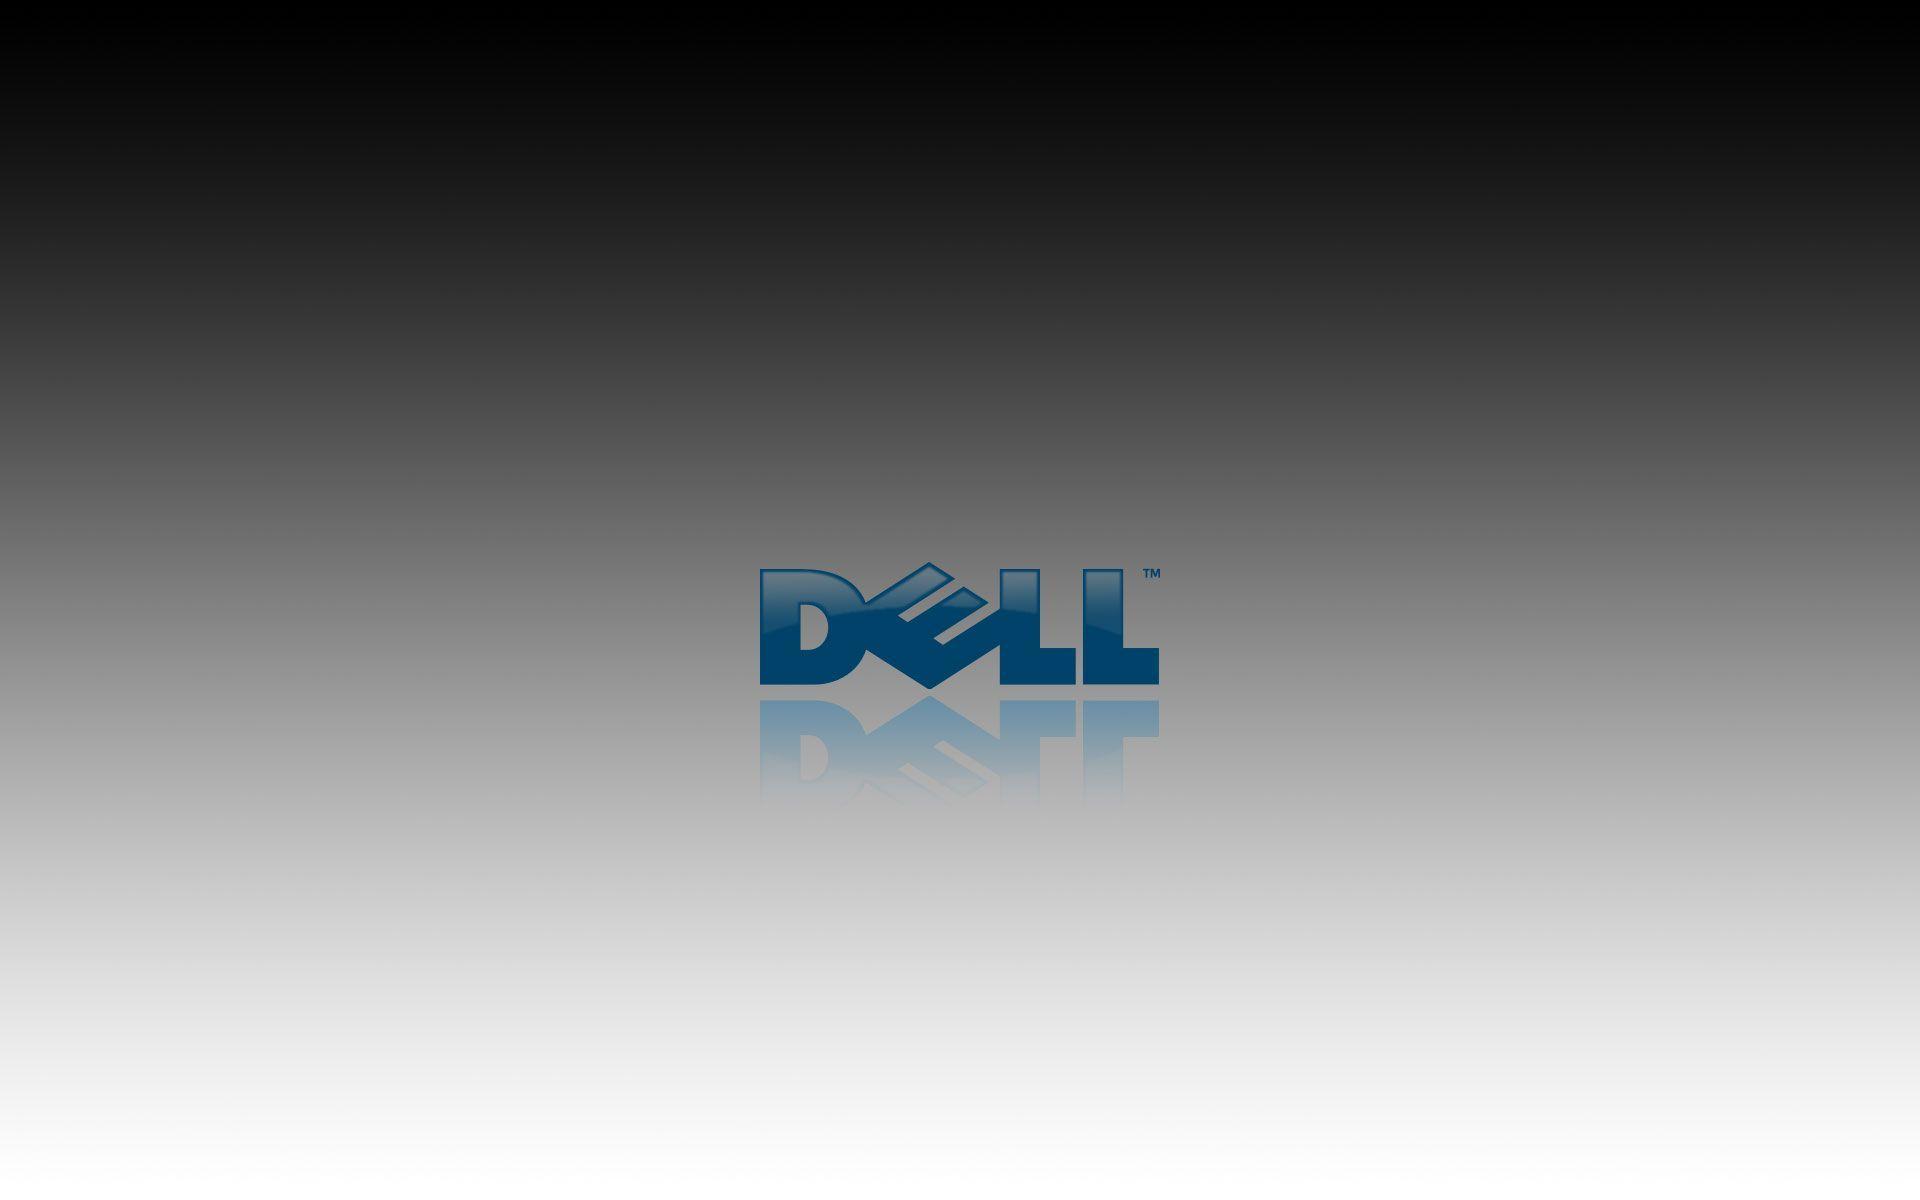 Dell Emc Wallpapers